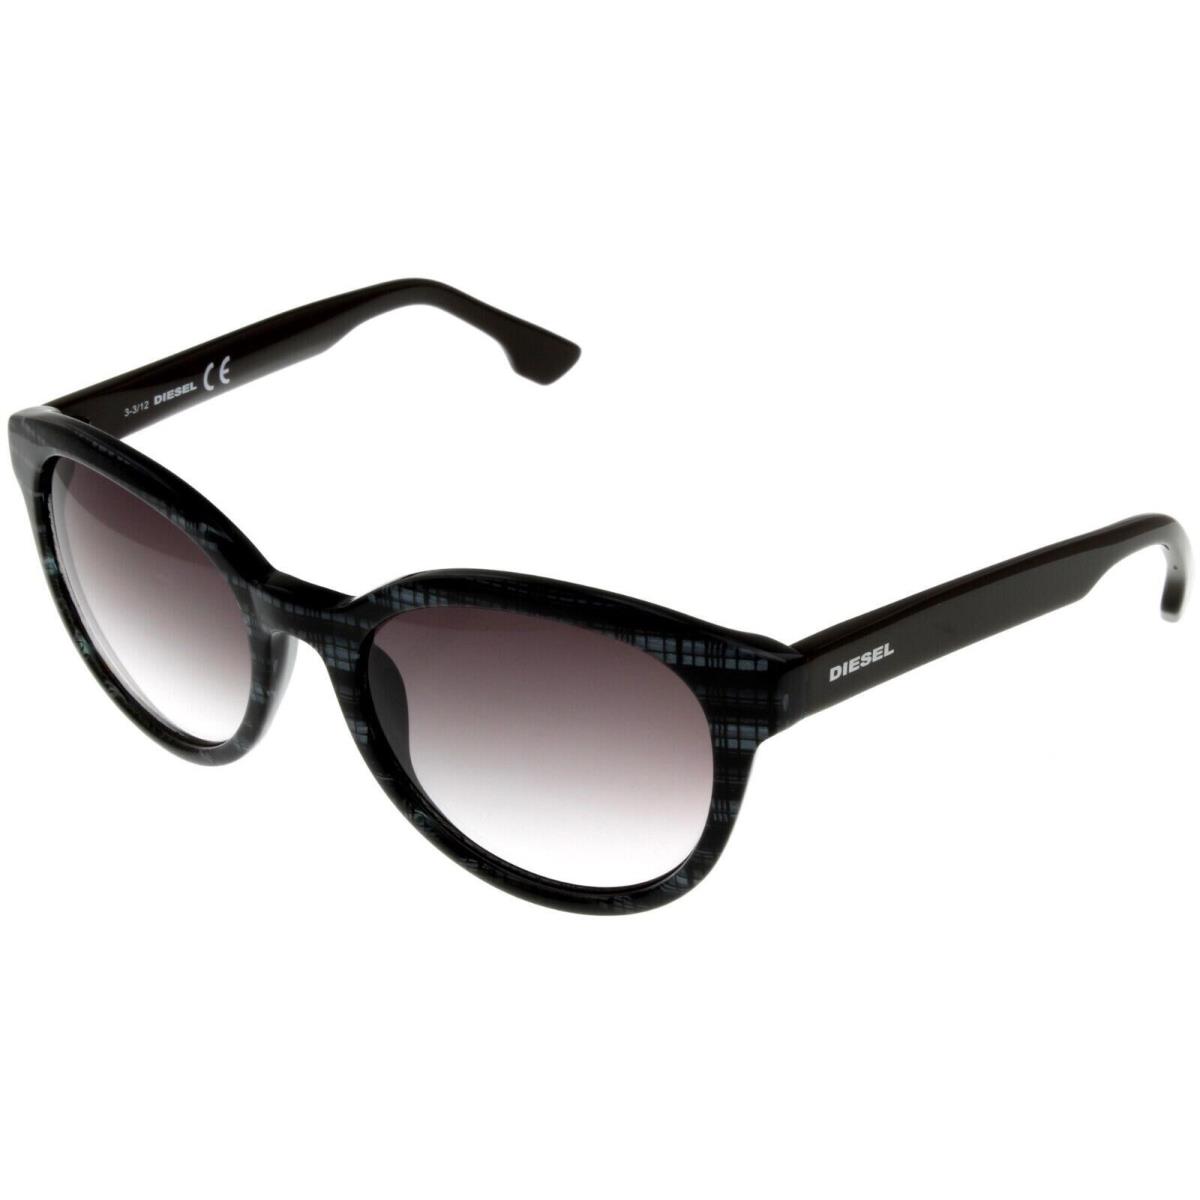 Diesel DL0041 20B Black Round Gray Gradient Non-polarized 54mm Unisex Sunglasses